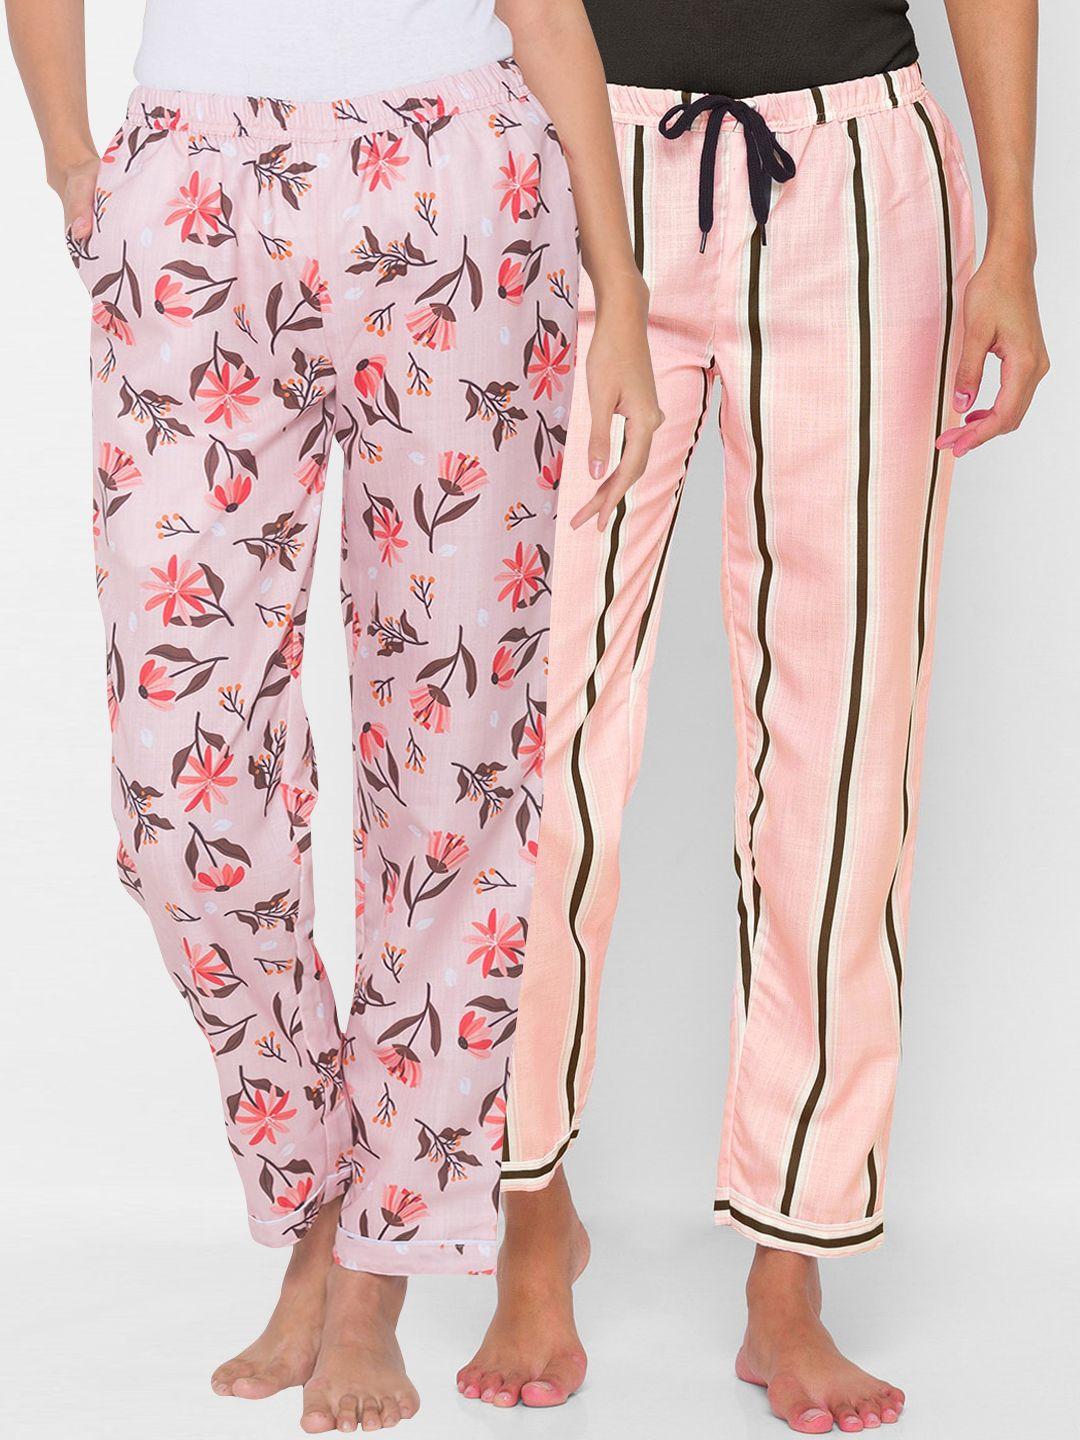 fashionrack women pack of 2 pink cotton lounge pants